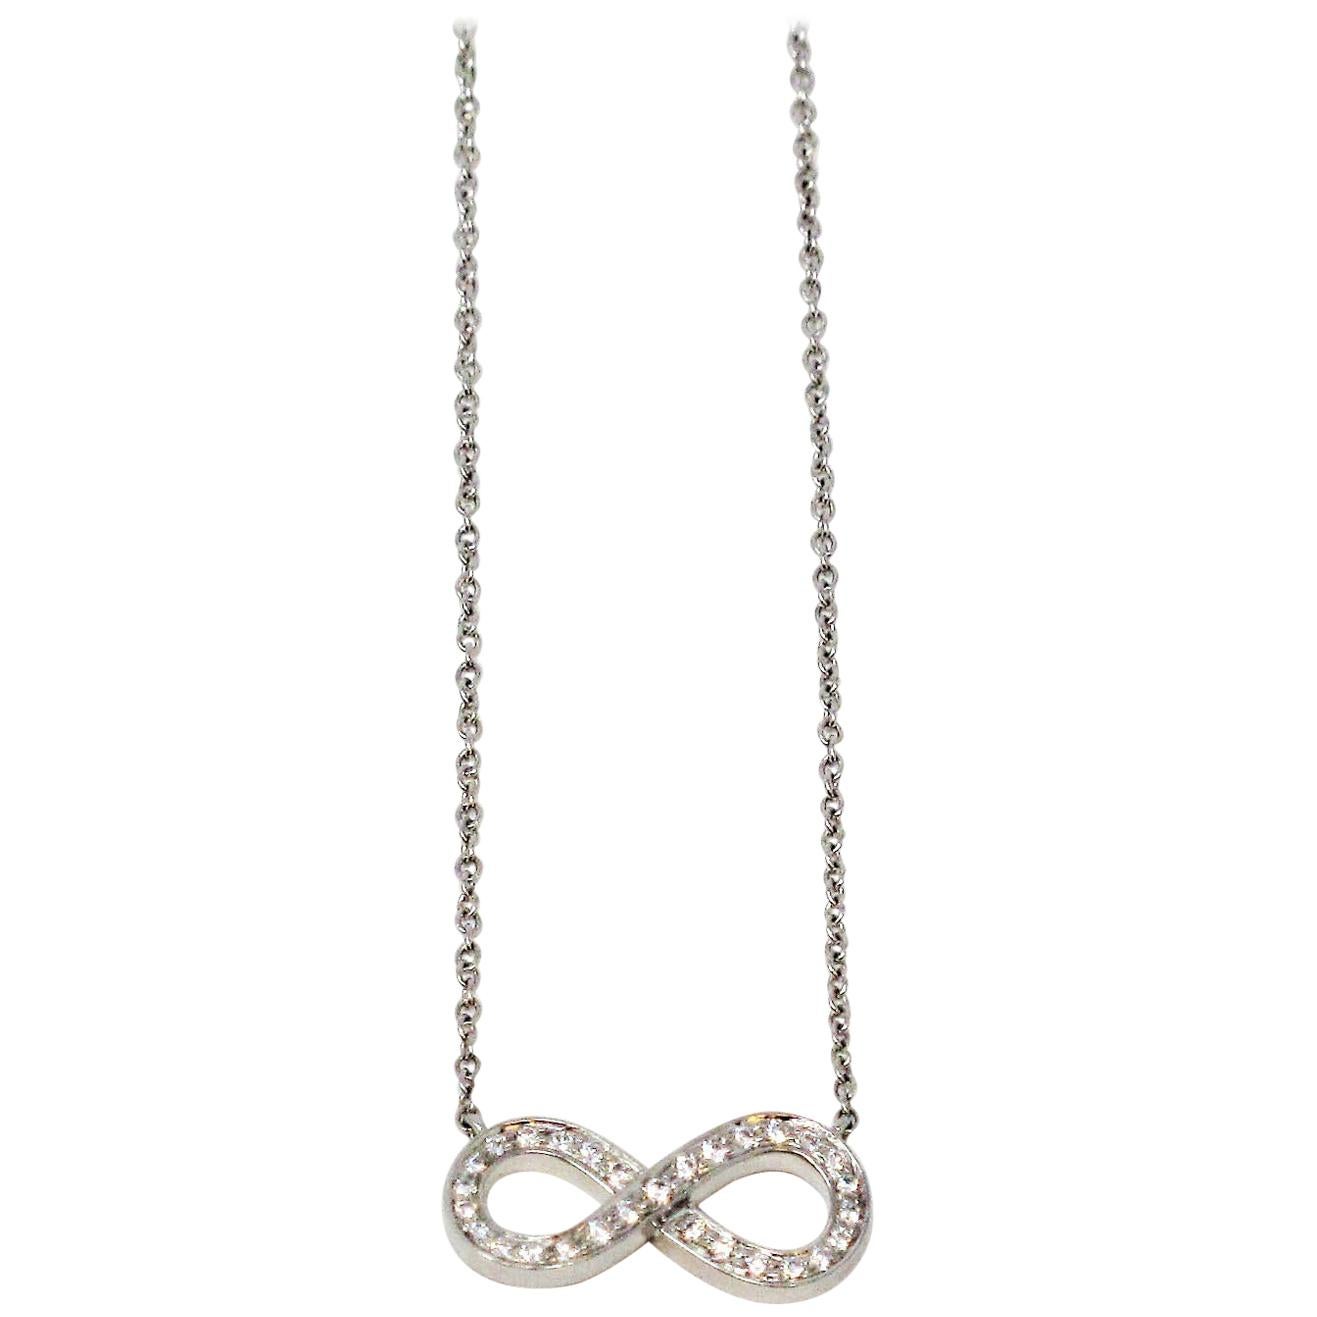 Tiffany & Co. Pave Diamond Infinity Pendant Necklace in Platinum